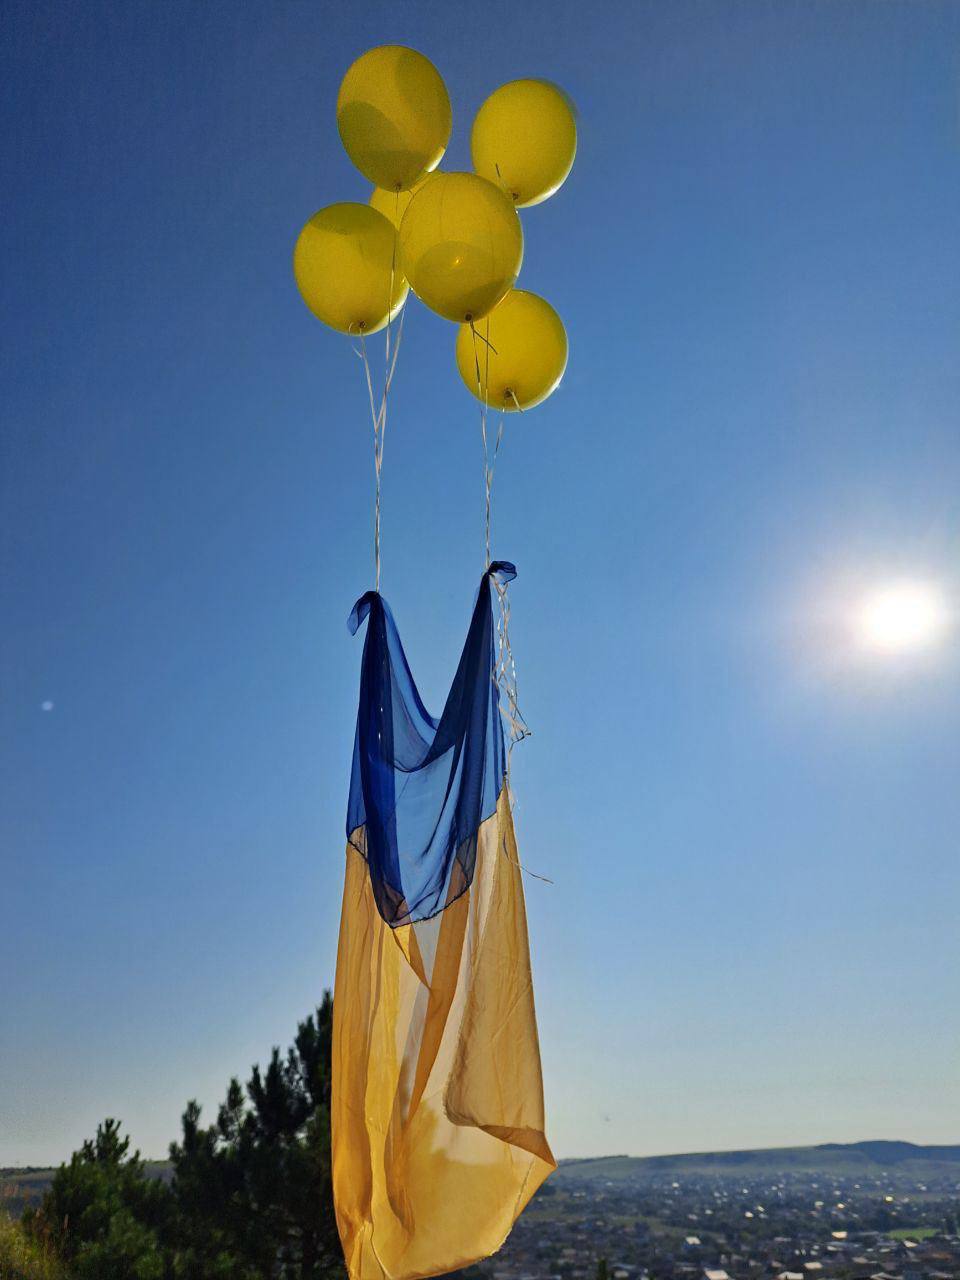 A Ukrainian flag flown on balloons above the Shaan-Kaia mountain near Alupka, occupied Crimea, on 23 August 2023